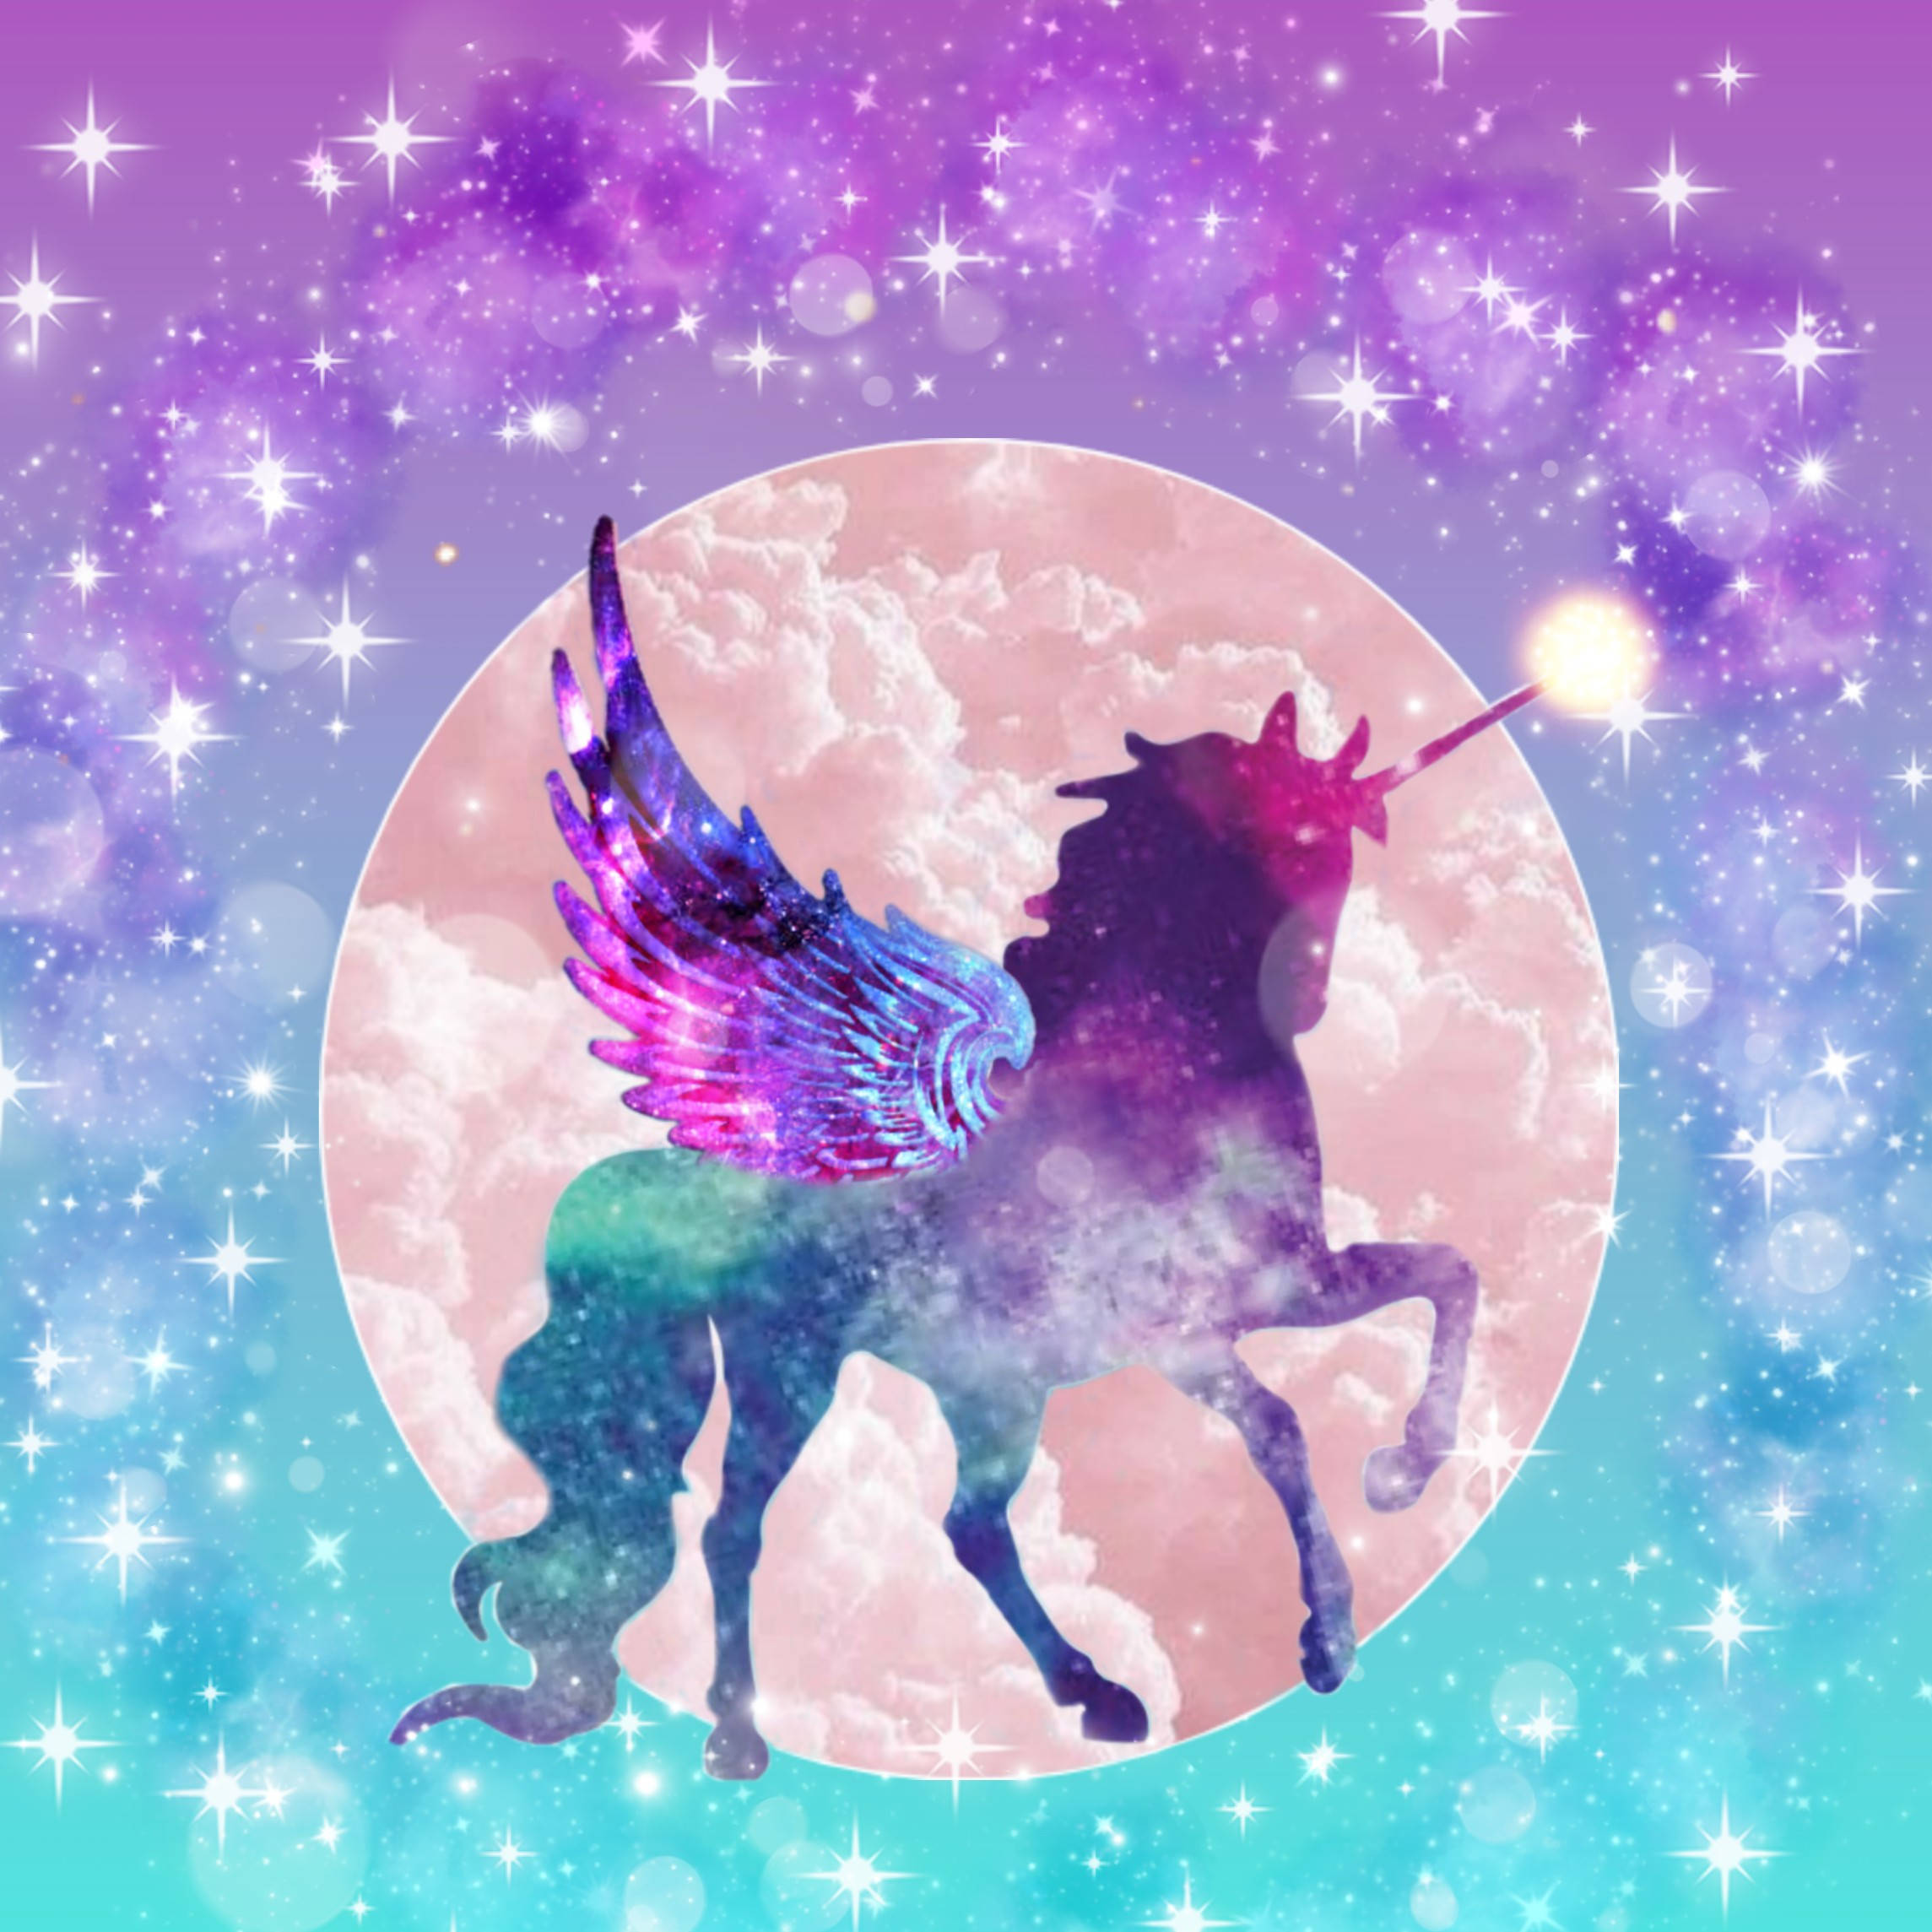 Magical Galaxy Unicorn Silhouette Art Wallpaper